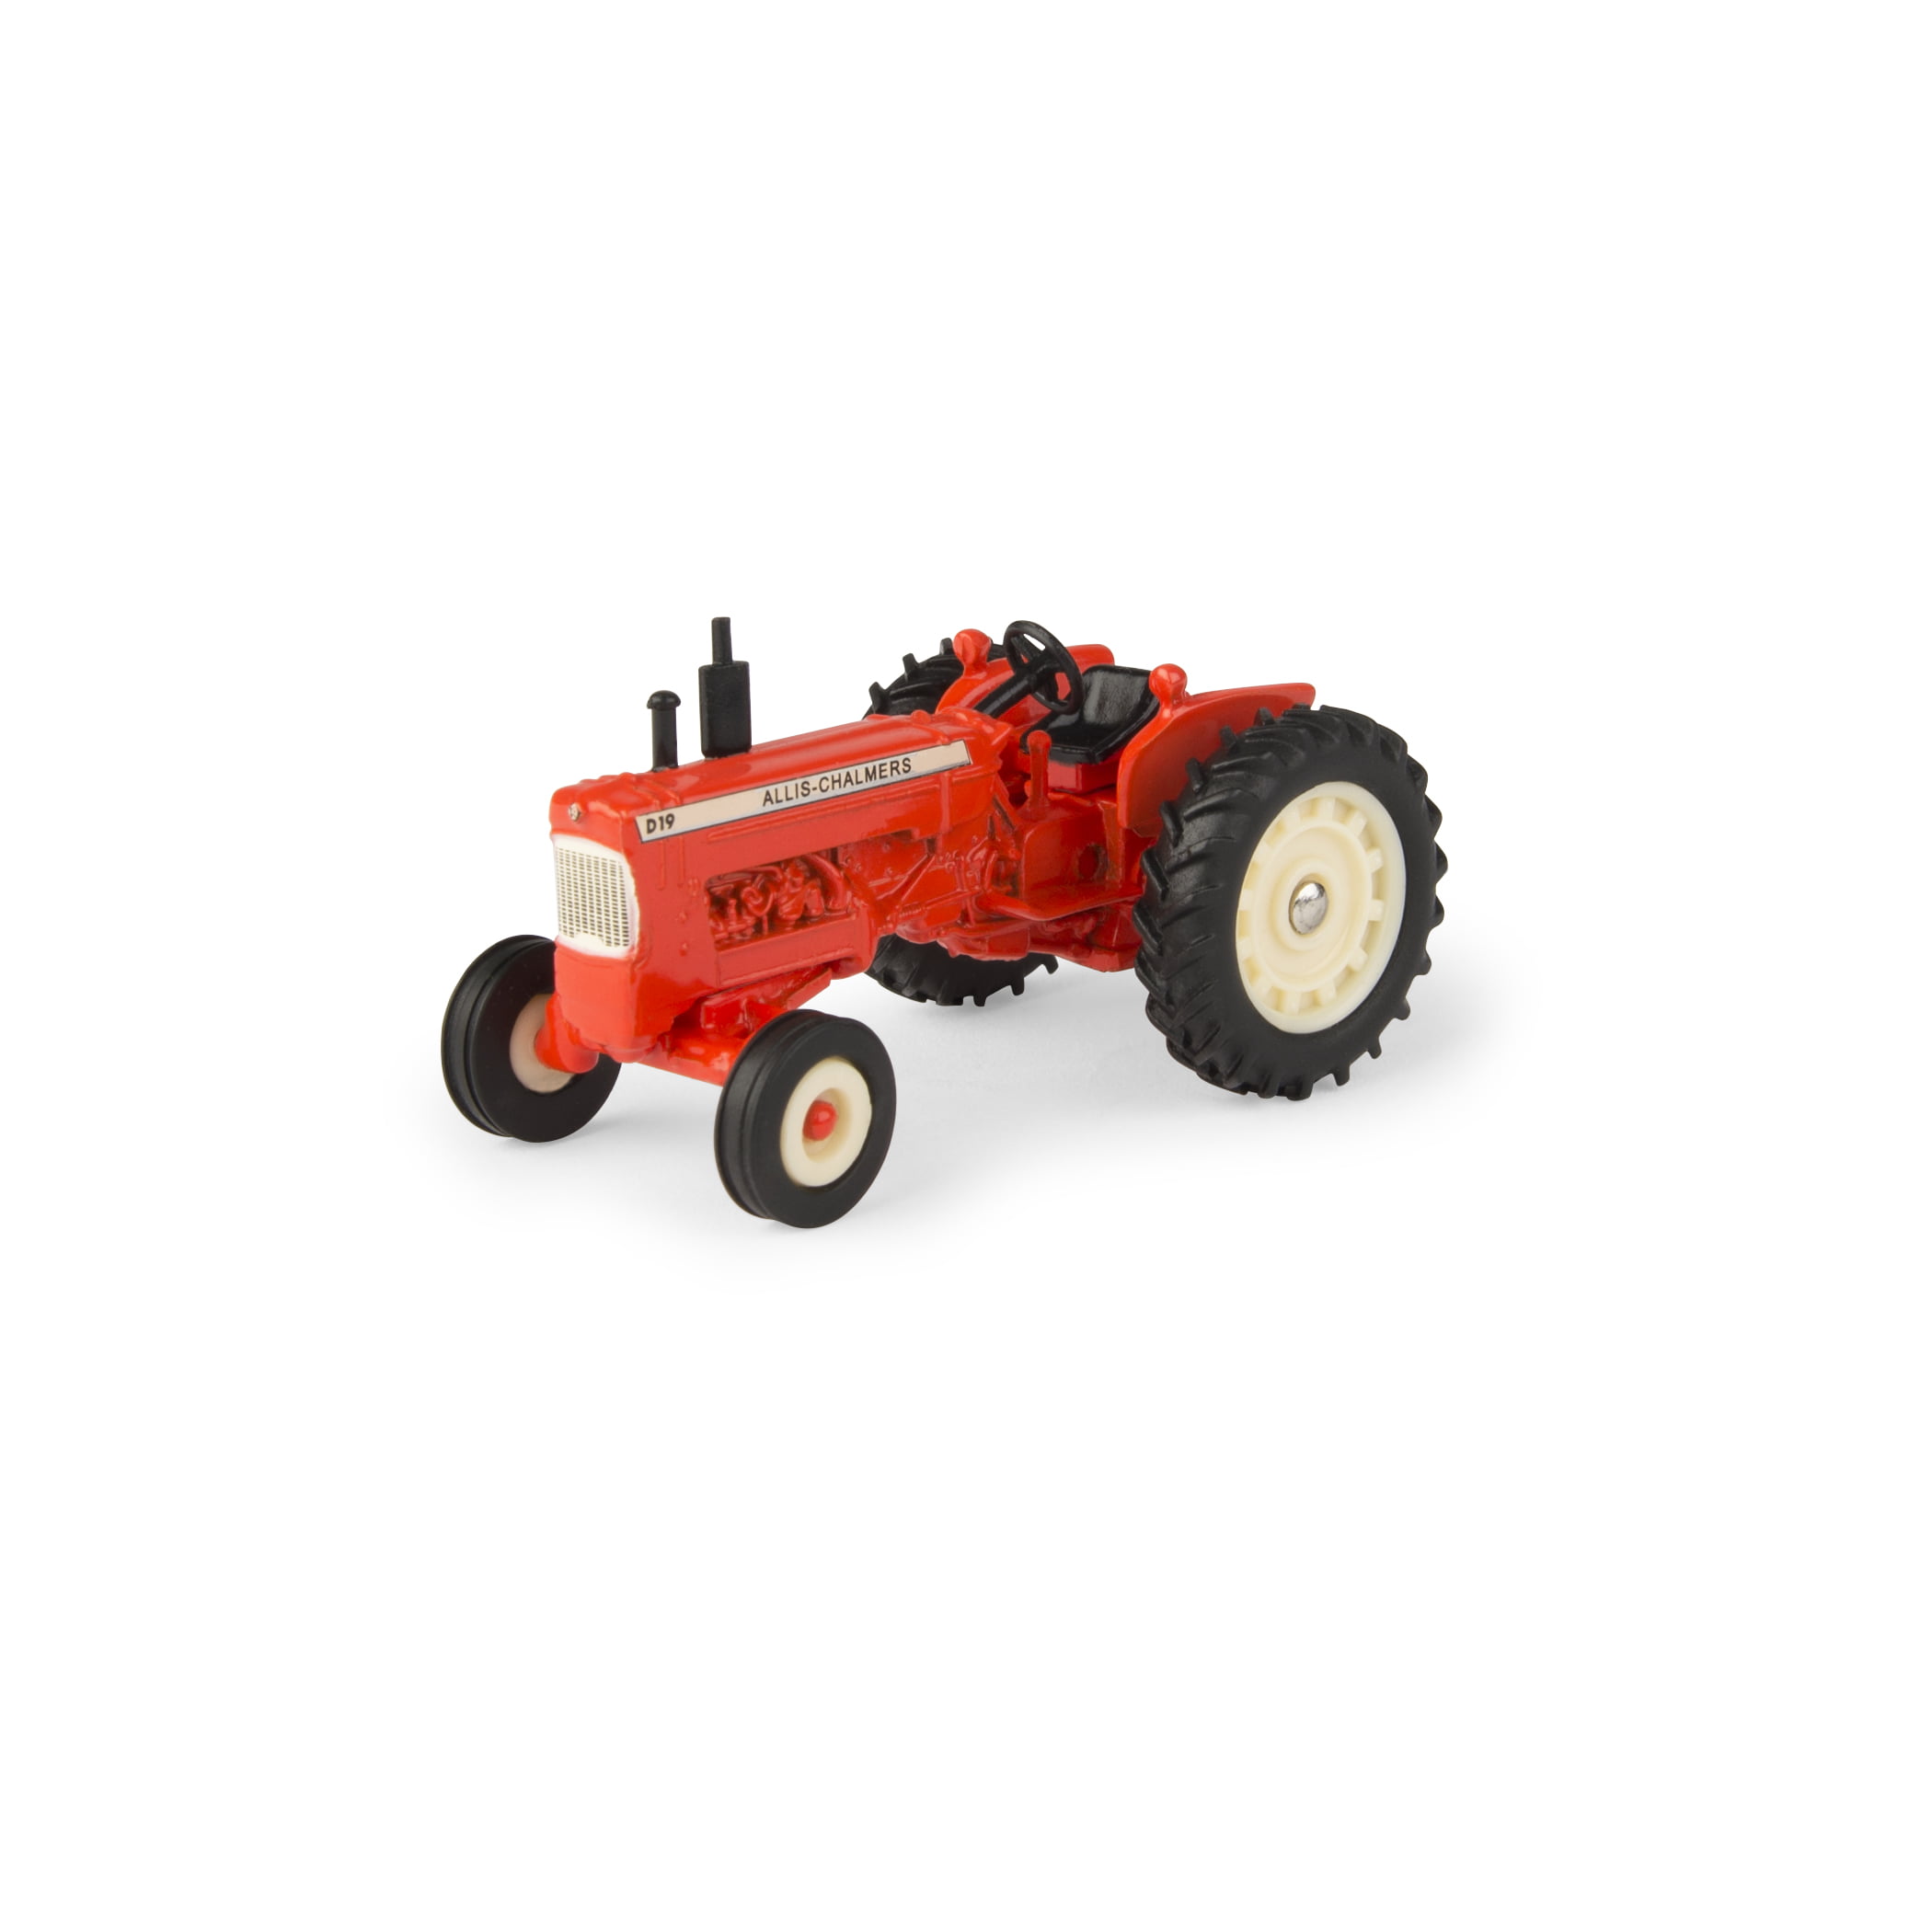 Vintage Collector Allis-Chalmers Tractor ERTL 1:64 Scale Farm Toy Model D19 